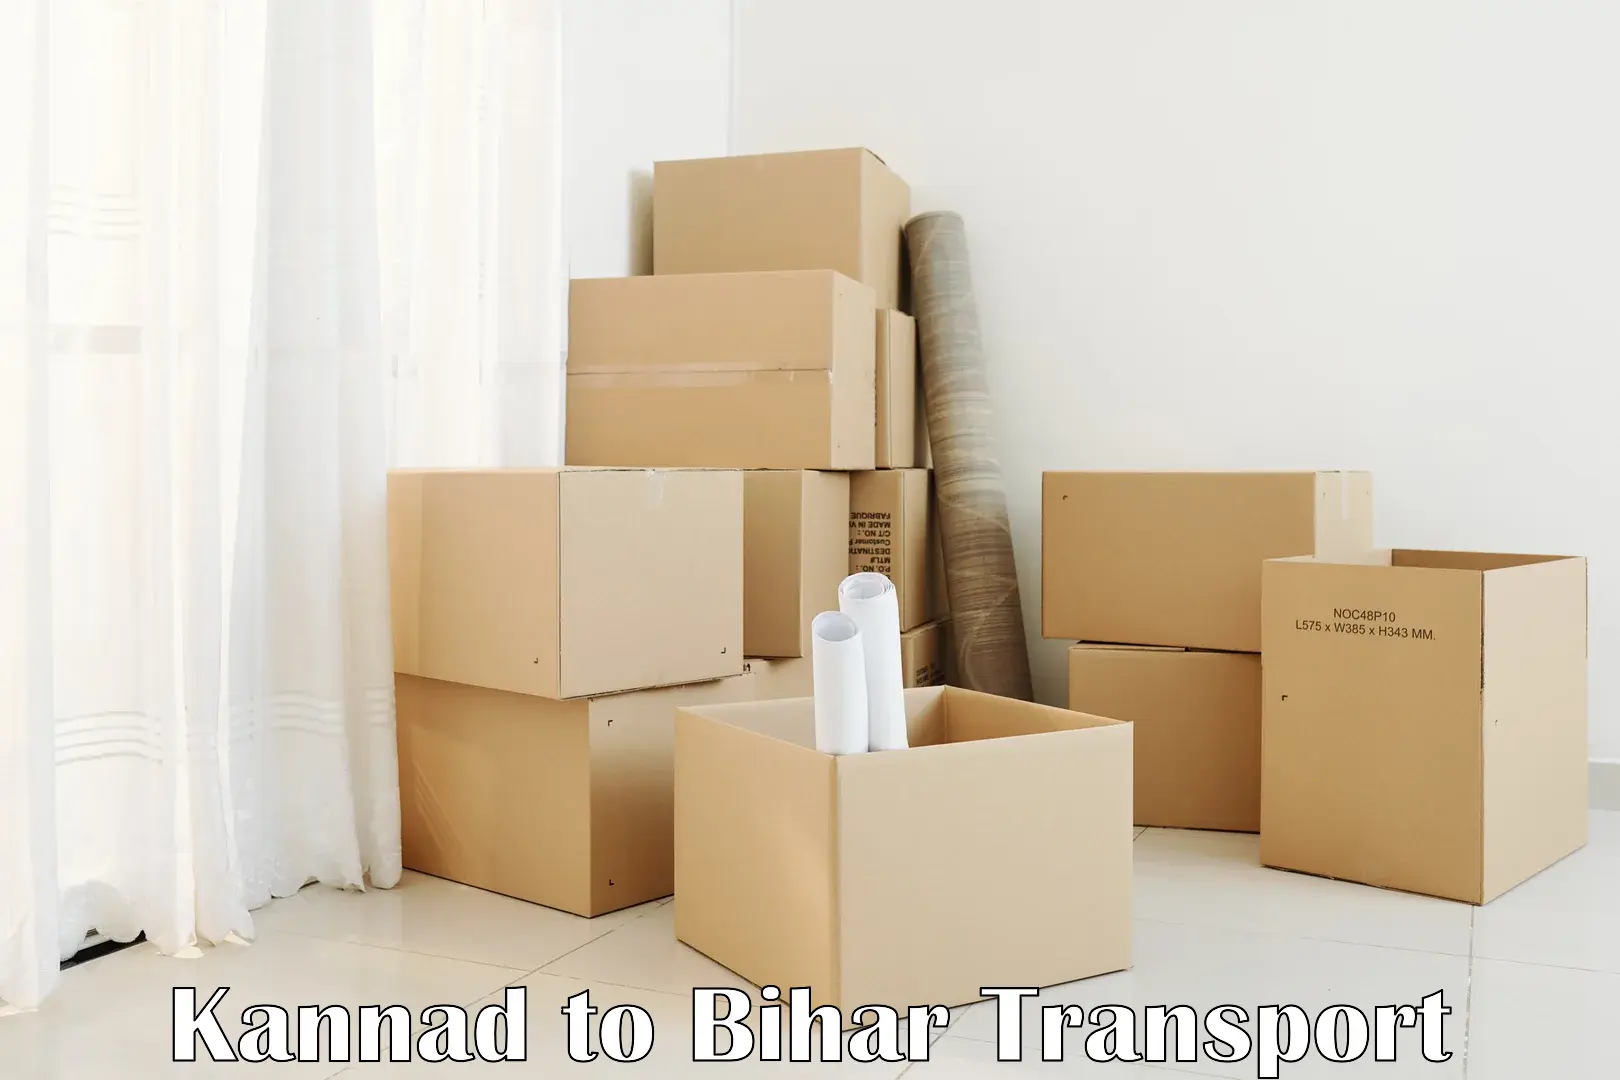 Daily parcel service transport Kannad to Bhagalpur